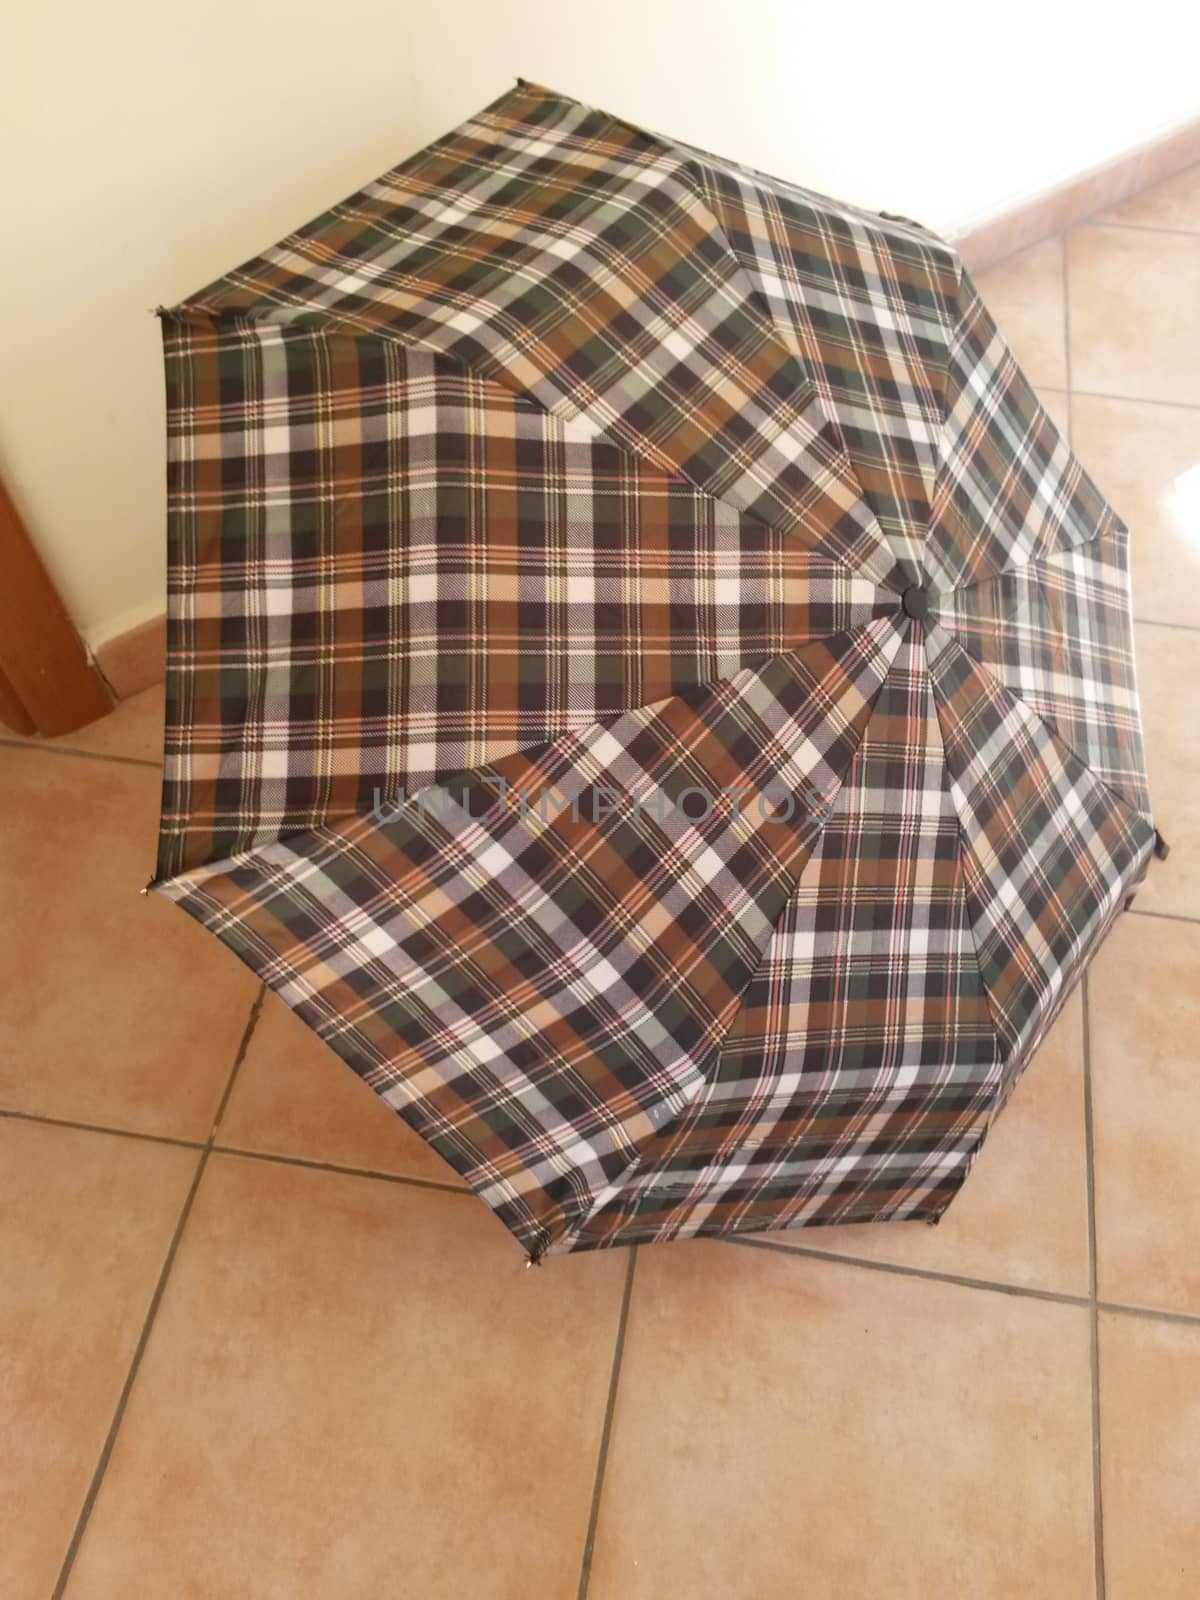 Umbrella by paolo77